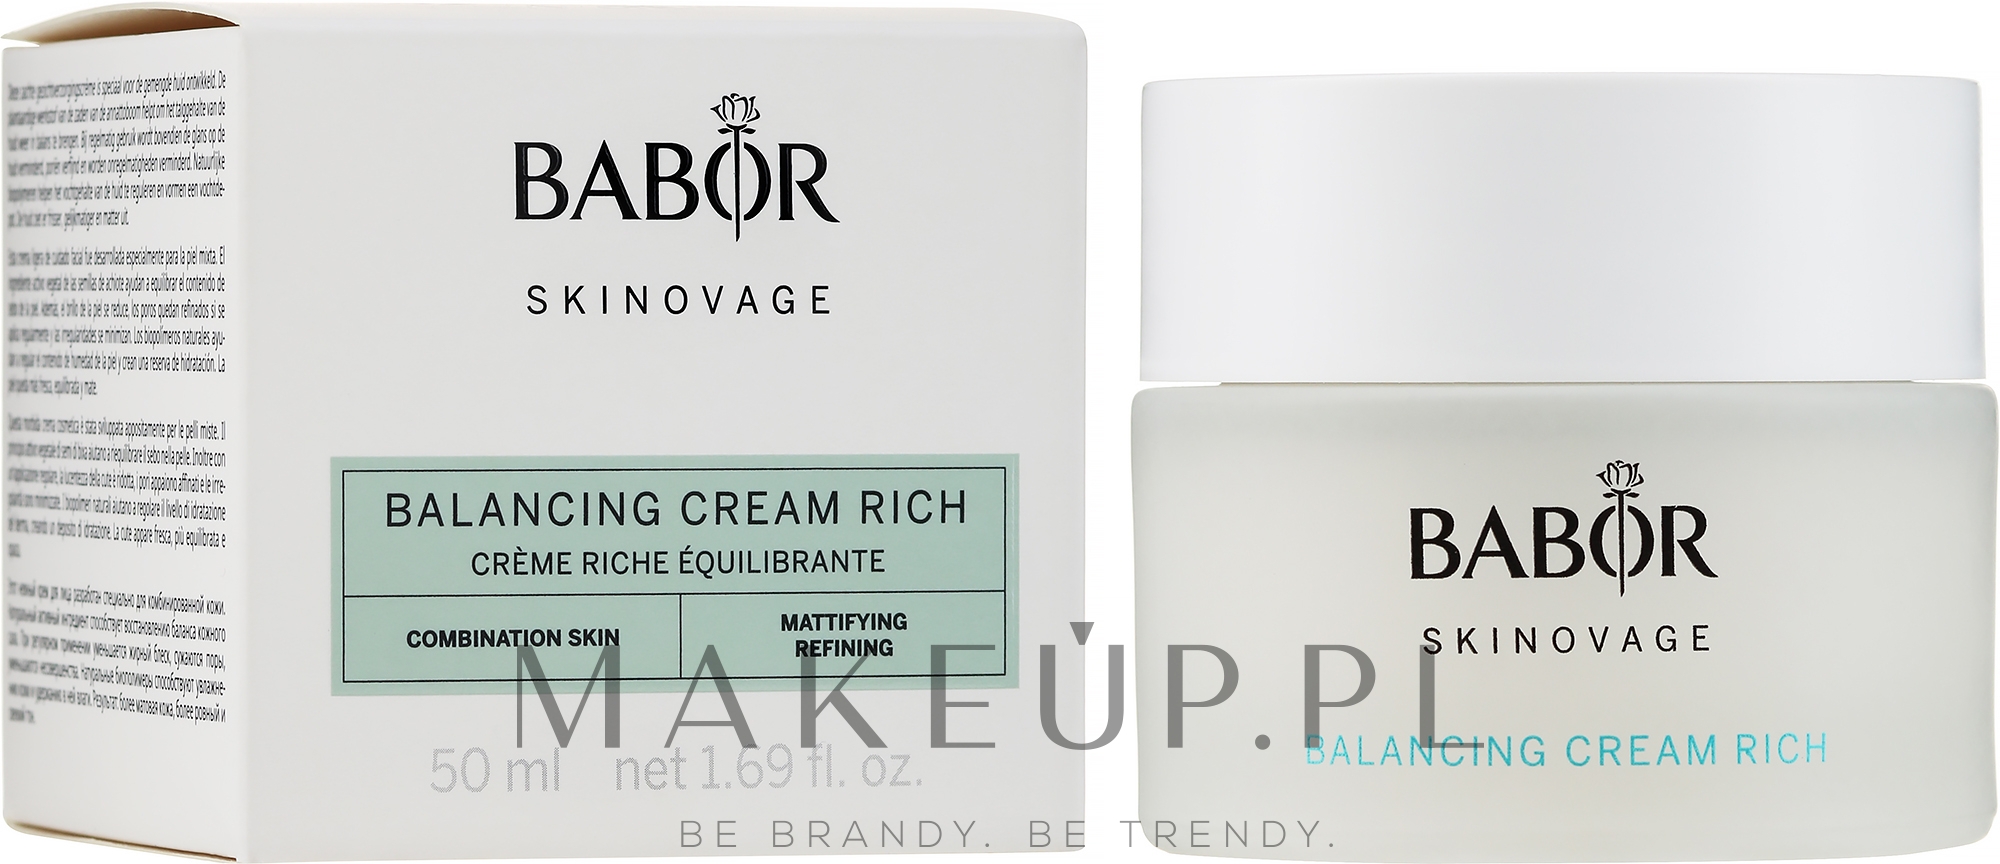 Bogaty nawilżający krem do skóry mieszanej - Babor Skinovage Balancing Cream Rich — Zdjęcie 50 ml